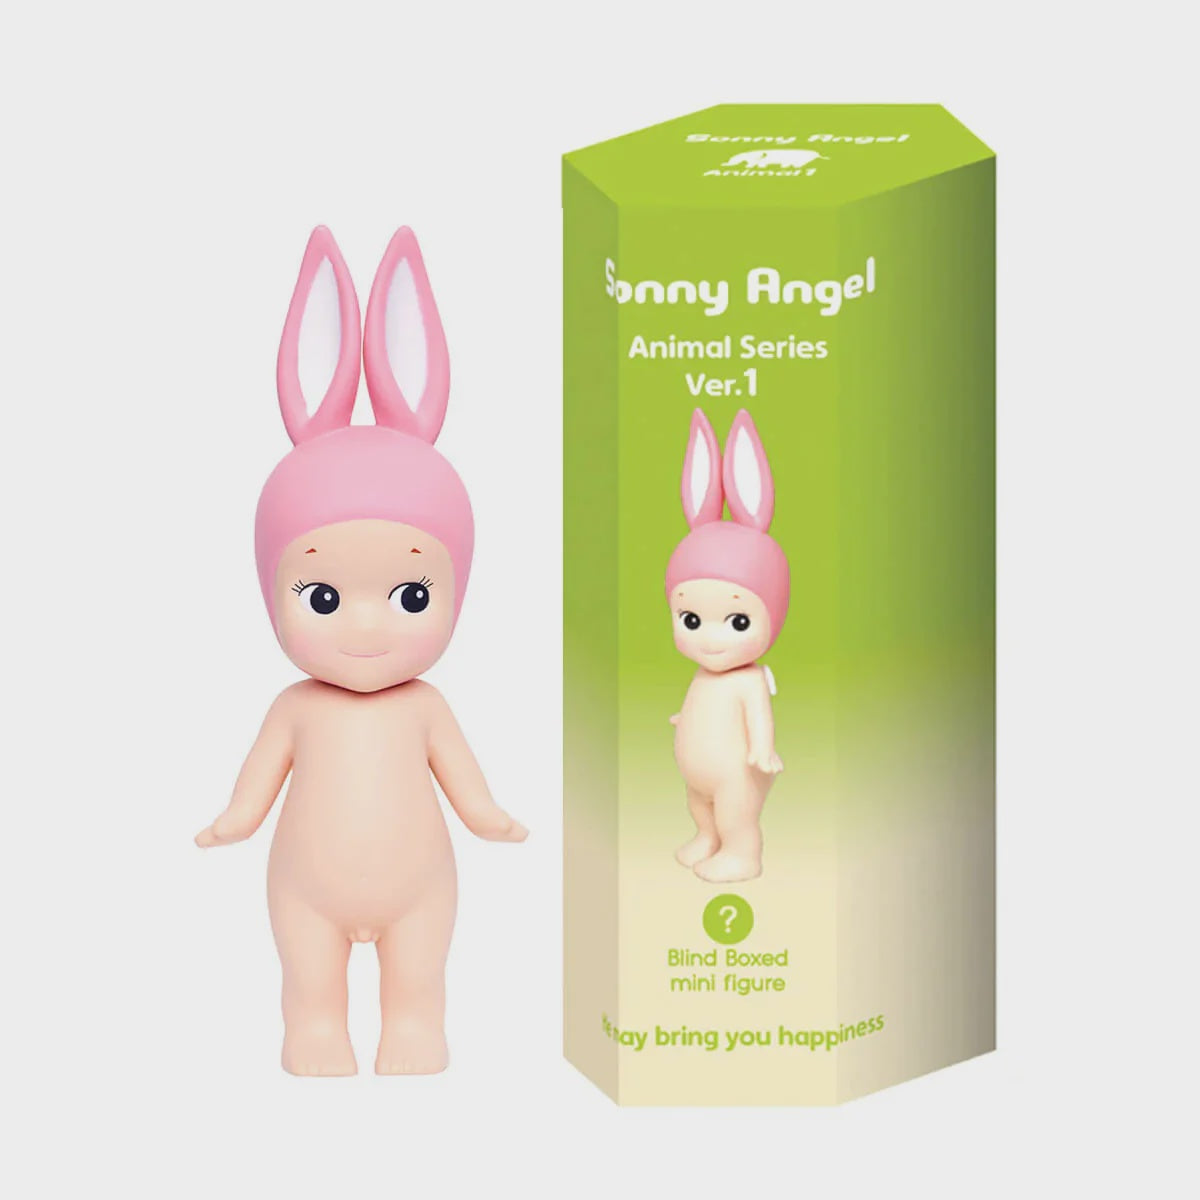 Sonny Angel Mini Figure - Animals Version 1